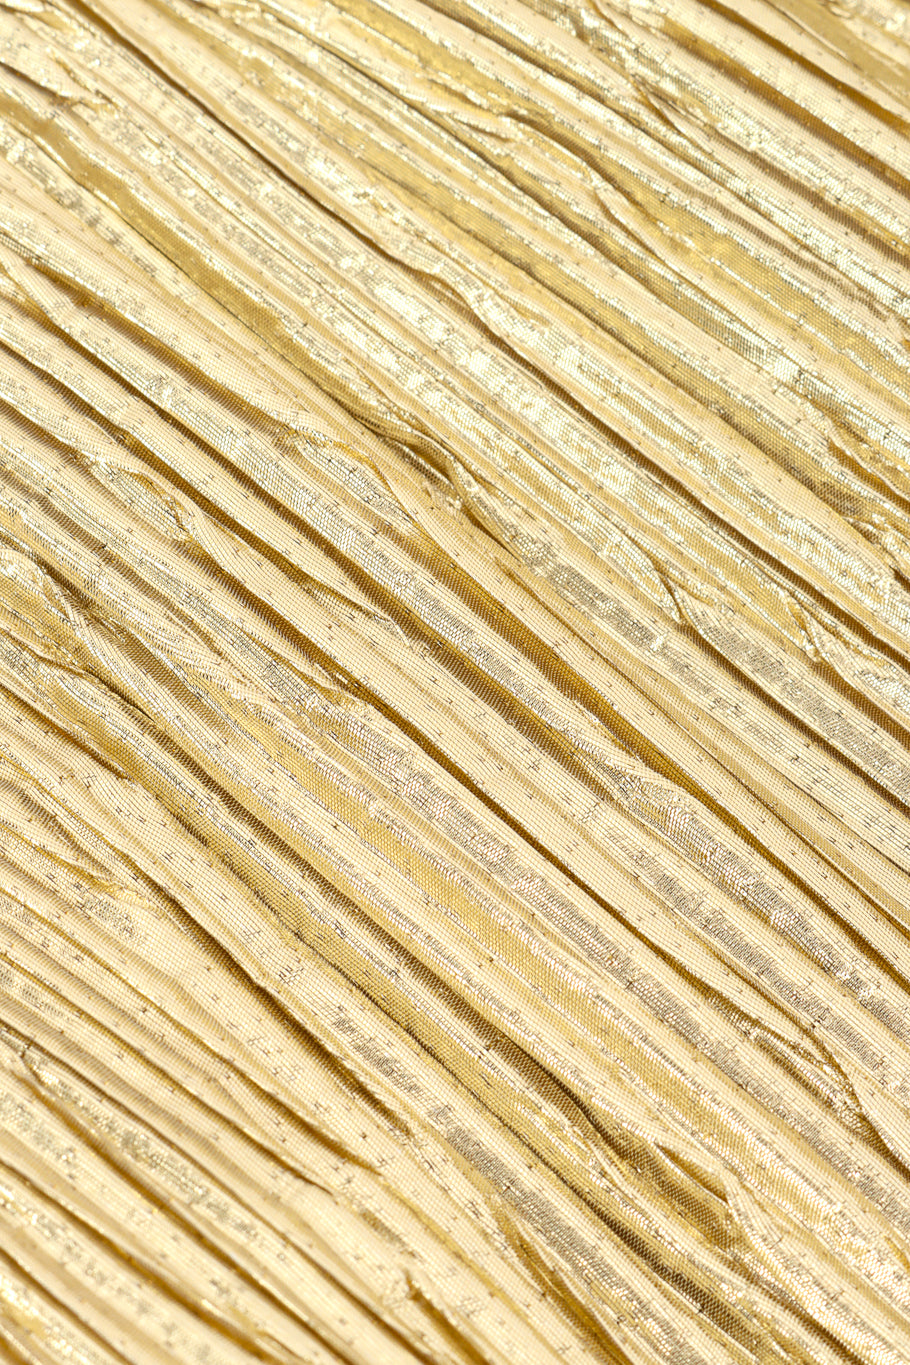 Vintage Whiting & Davis Gold Mesh Box Top II pleated fabric closeup @recessla